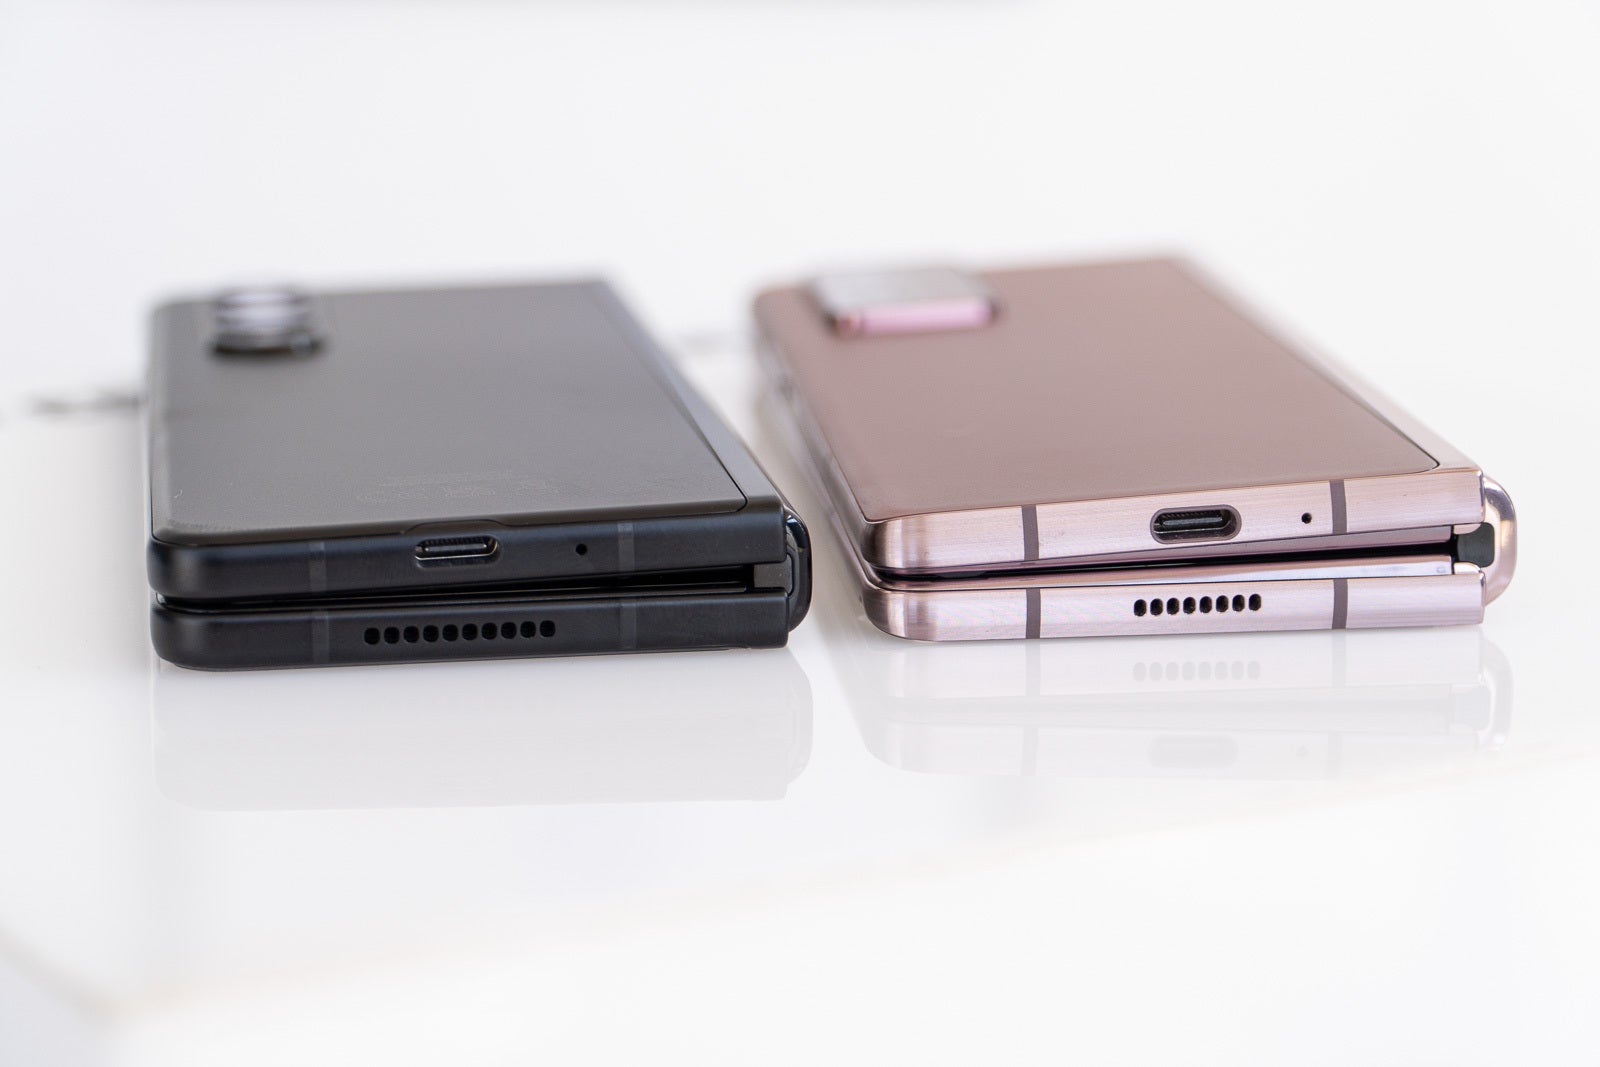 Z Fold 3 left, Z Fold 2 right - Samsung Galaxy Z Fold 3 review: key features